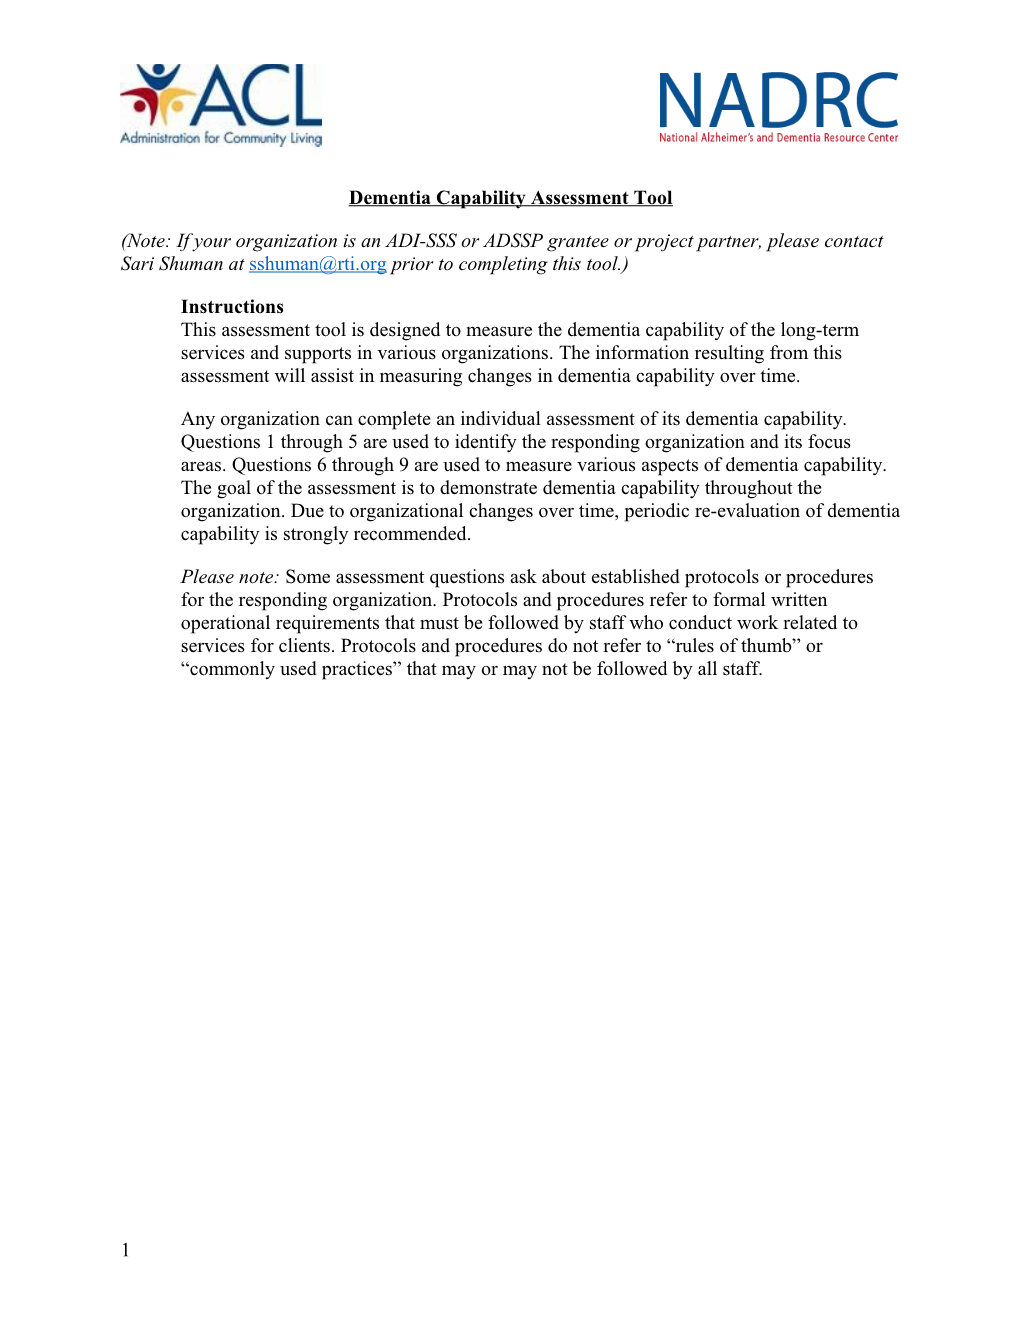 NADRC Dementia Capability Assessment